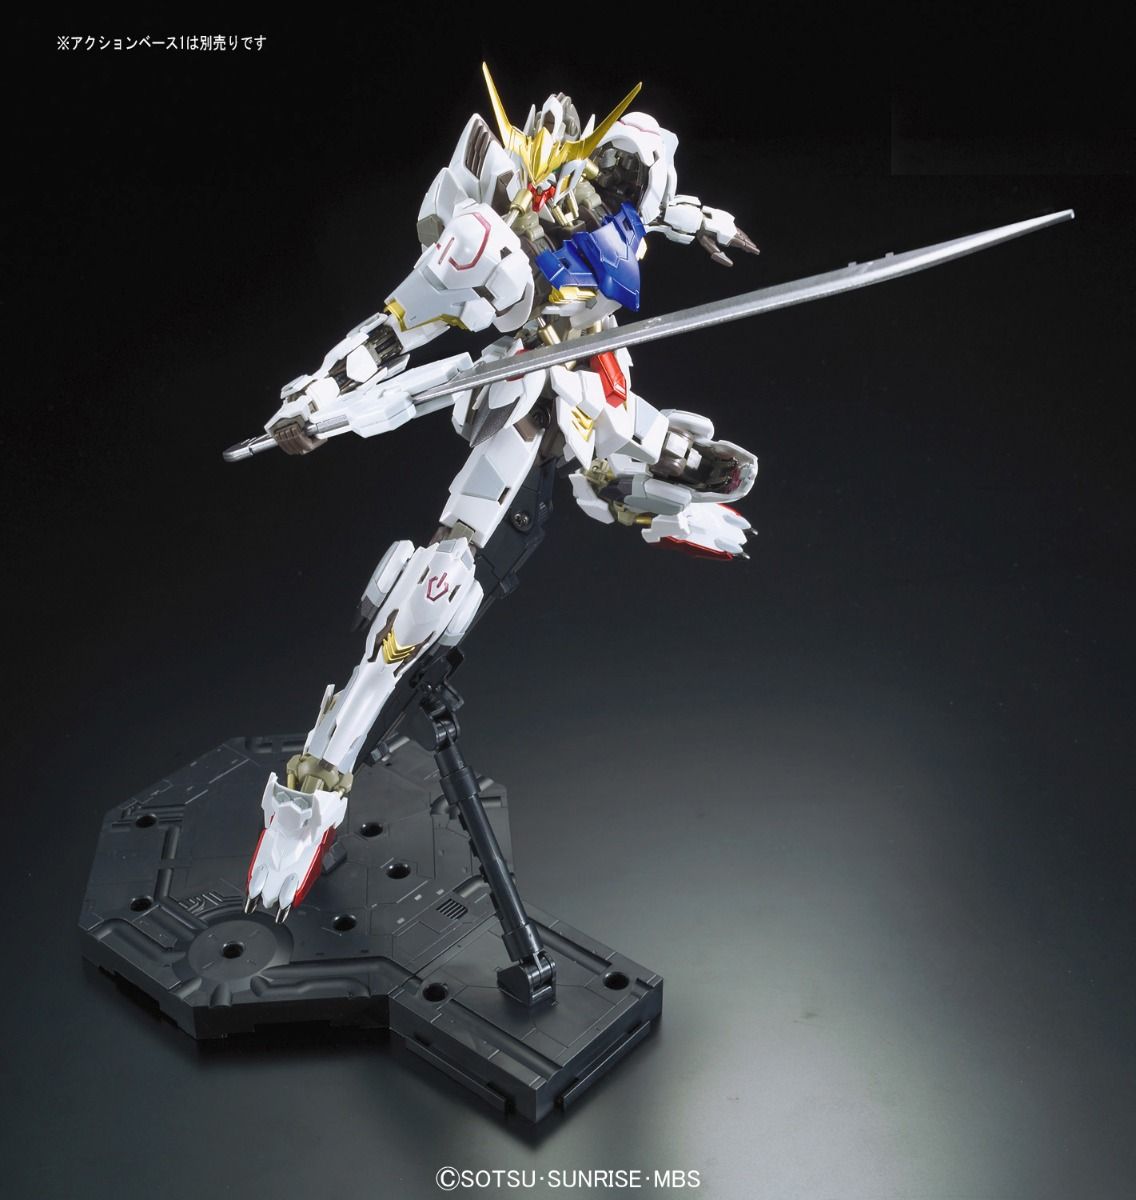 HiRM 1/100 Gundam Barbatos - High Resolution Model Mobile Suit Gundam IRON-BLOODED ORPHAN | Glacier Hobbies